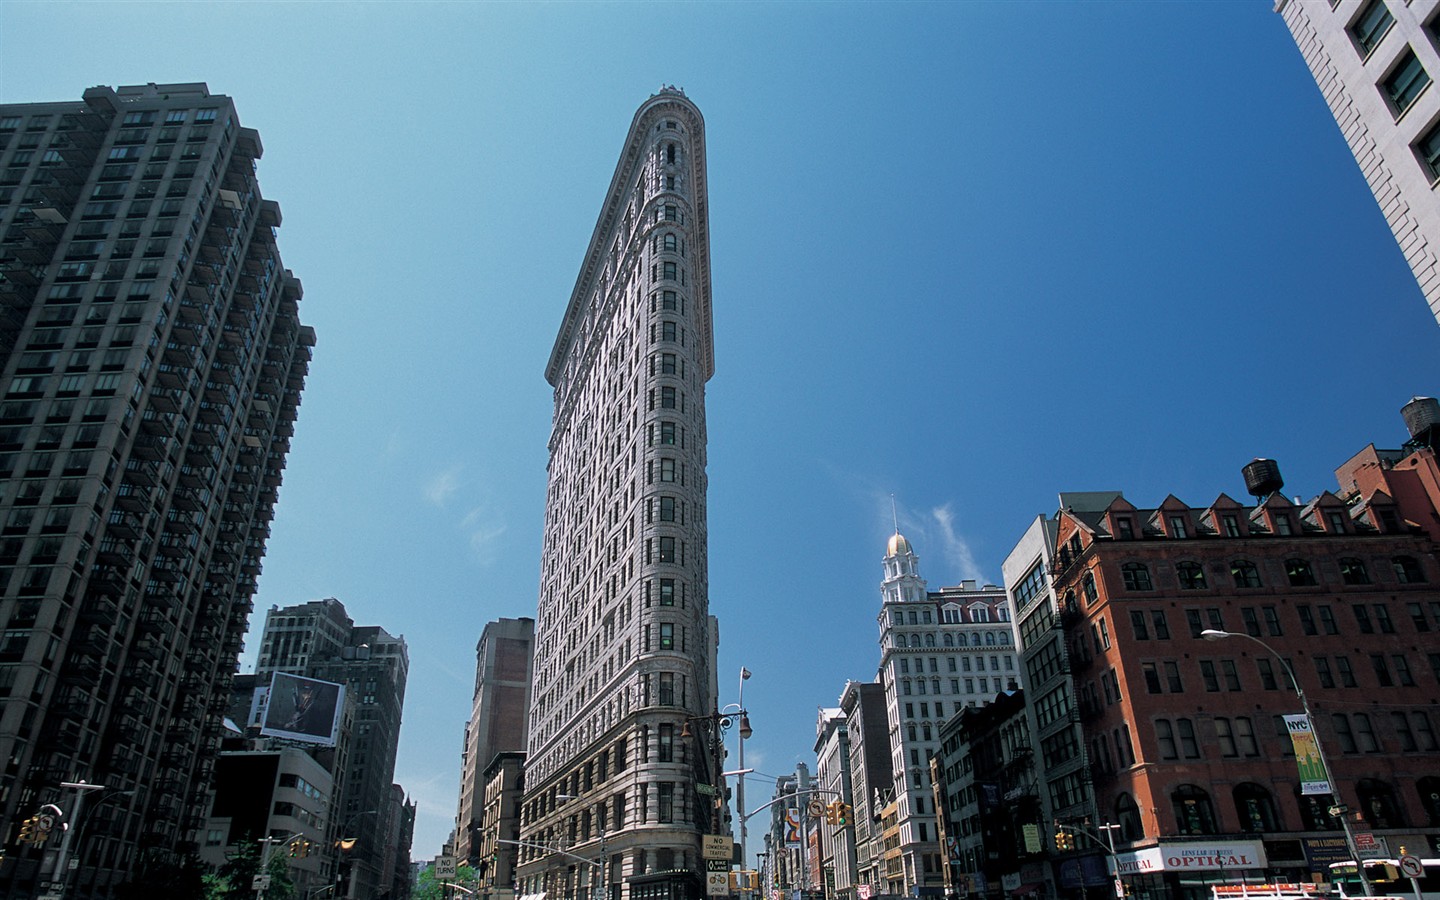 Quirligen Stadt New York Building #8 - 1440x900